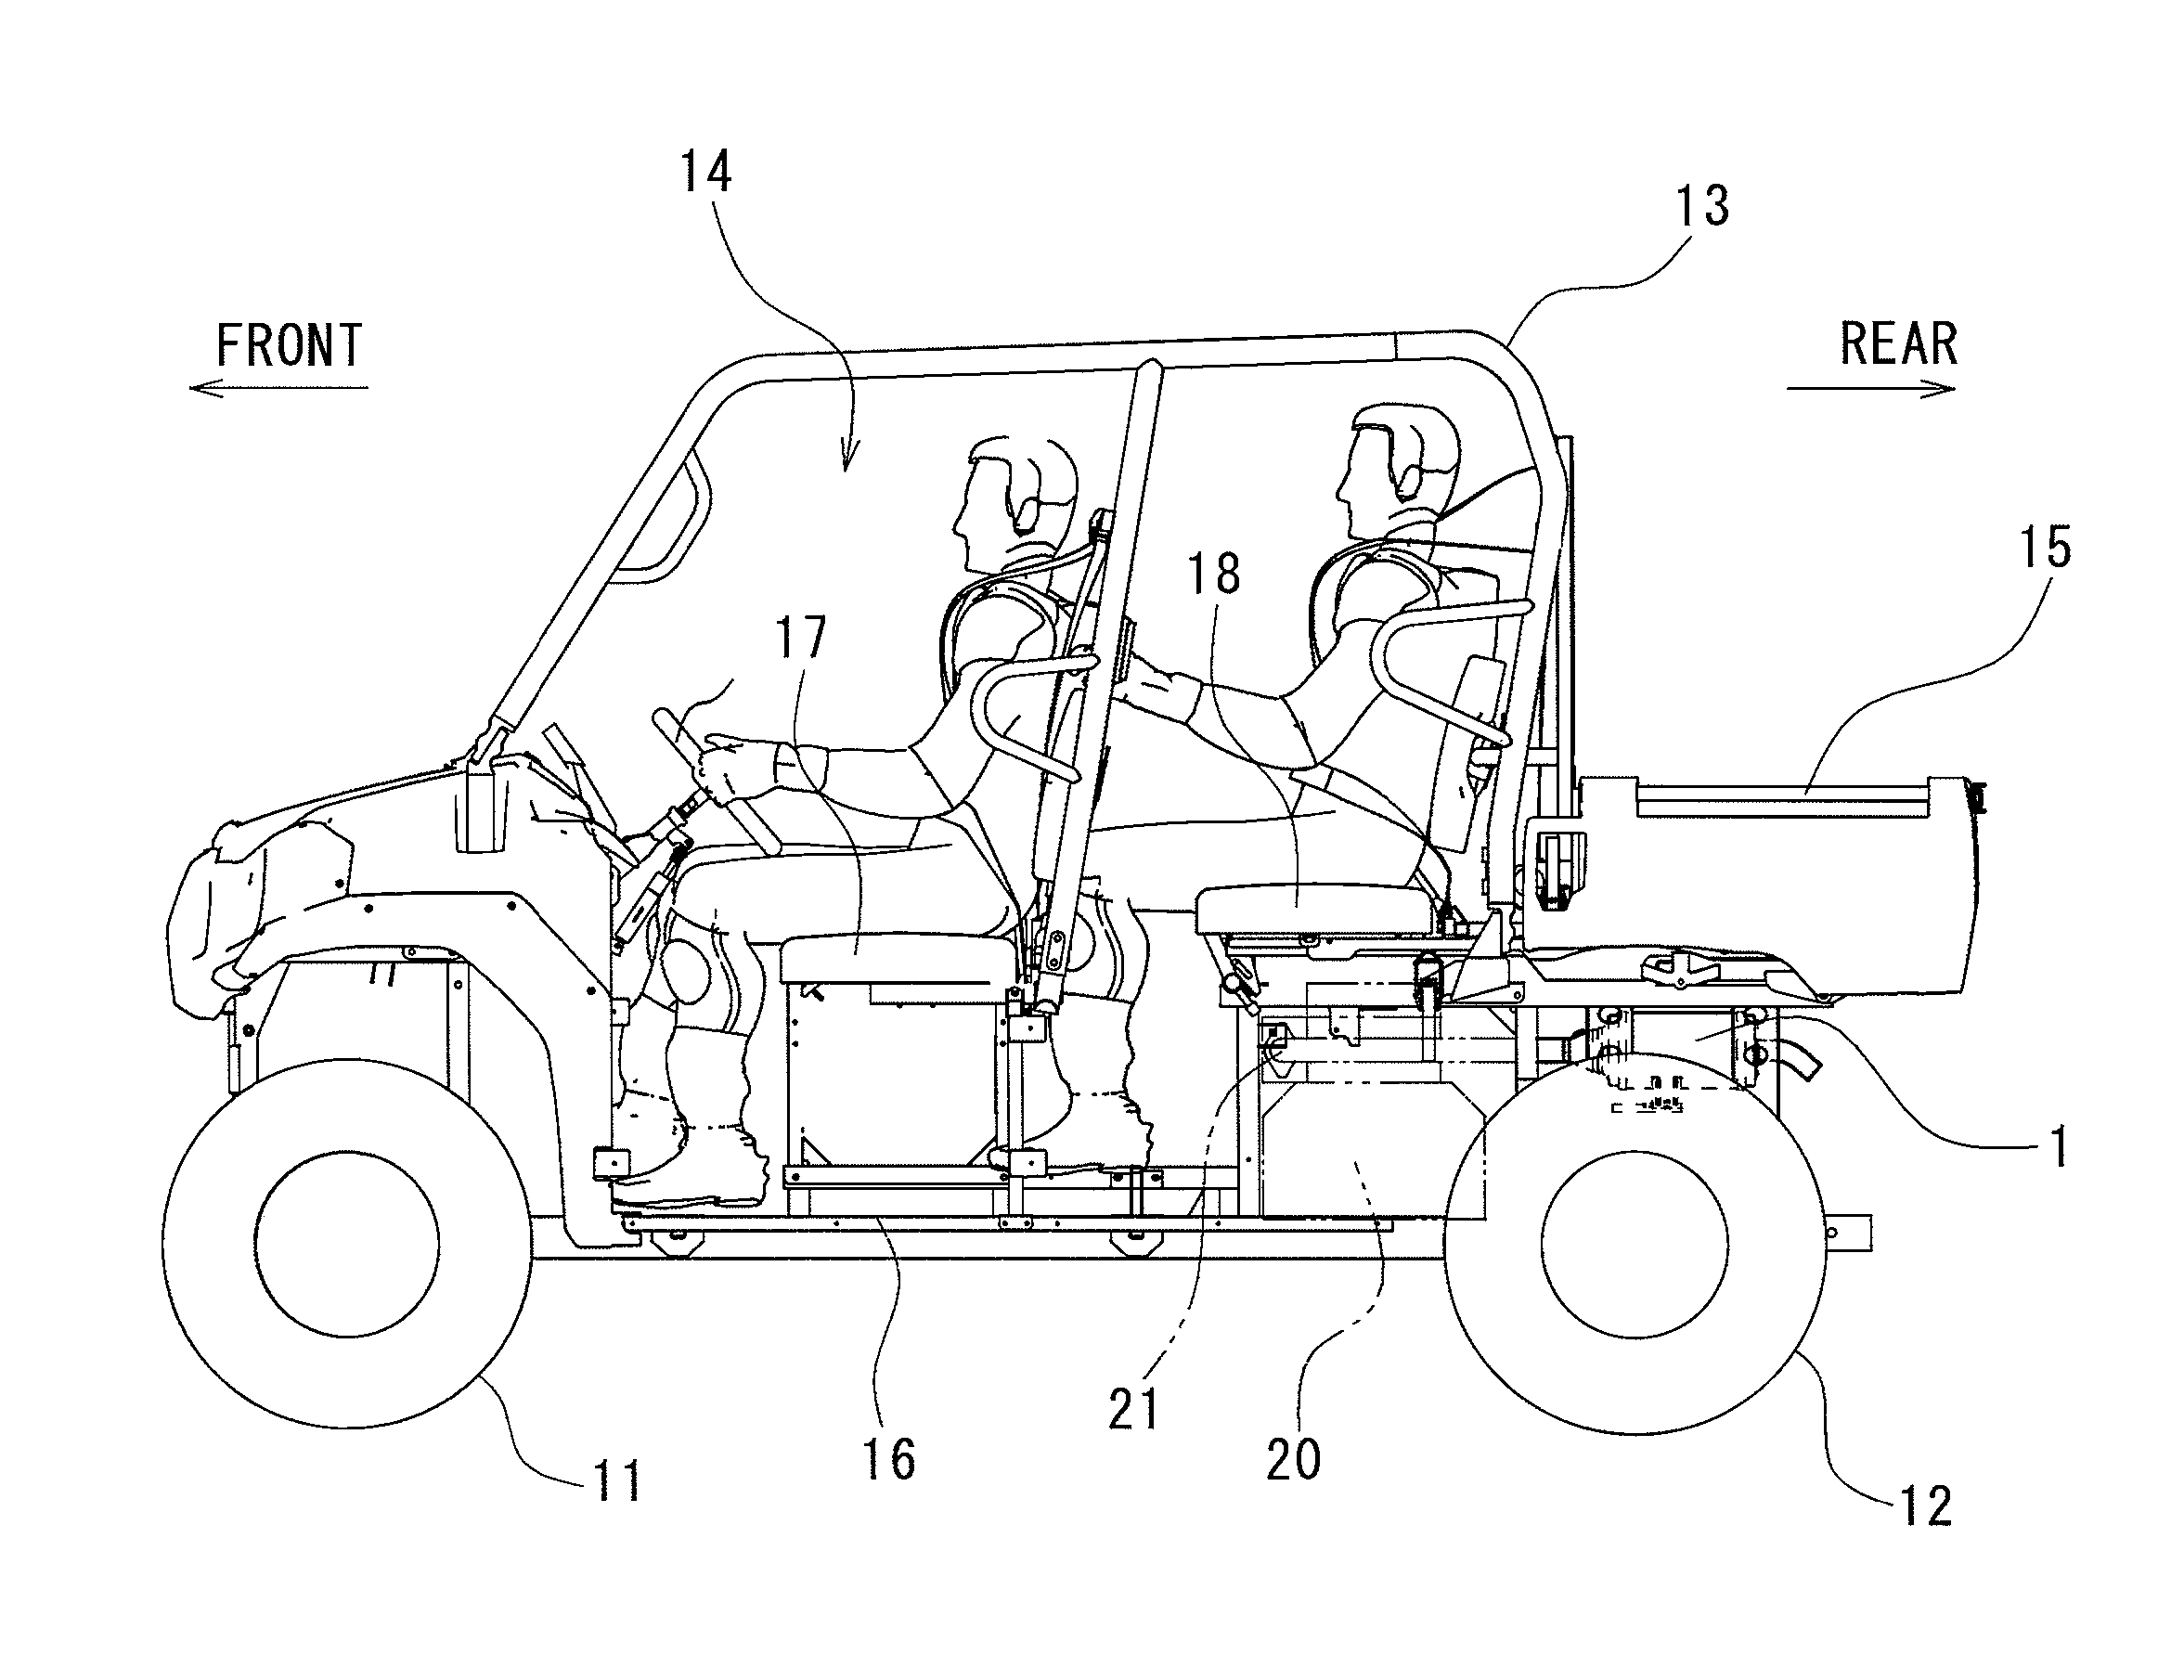 Exhaust muffler for vehicle